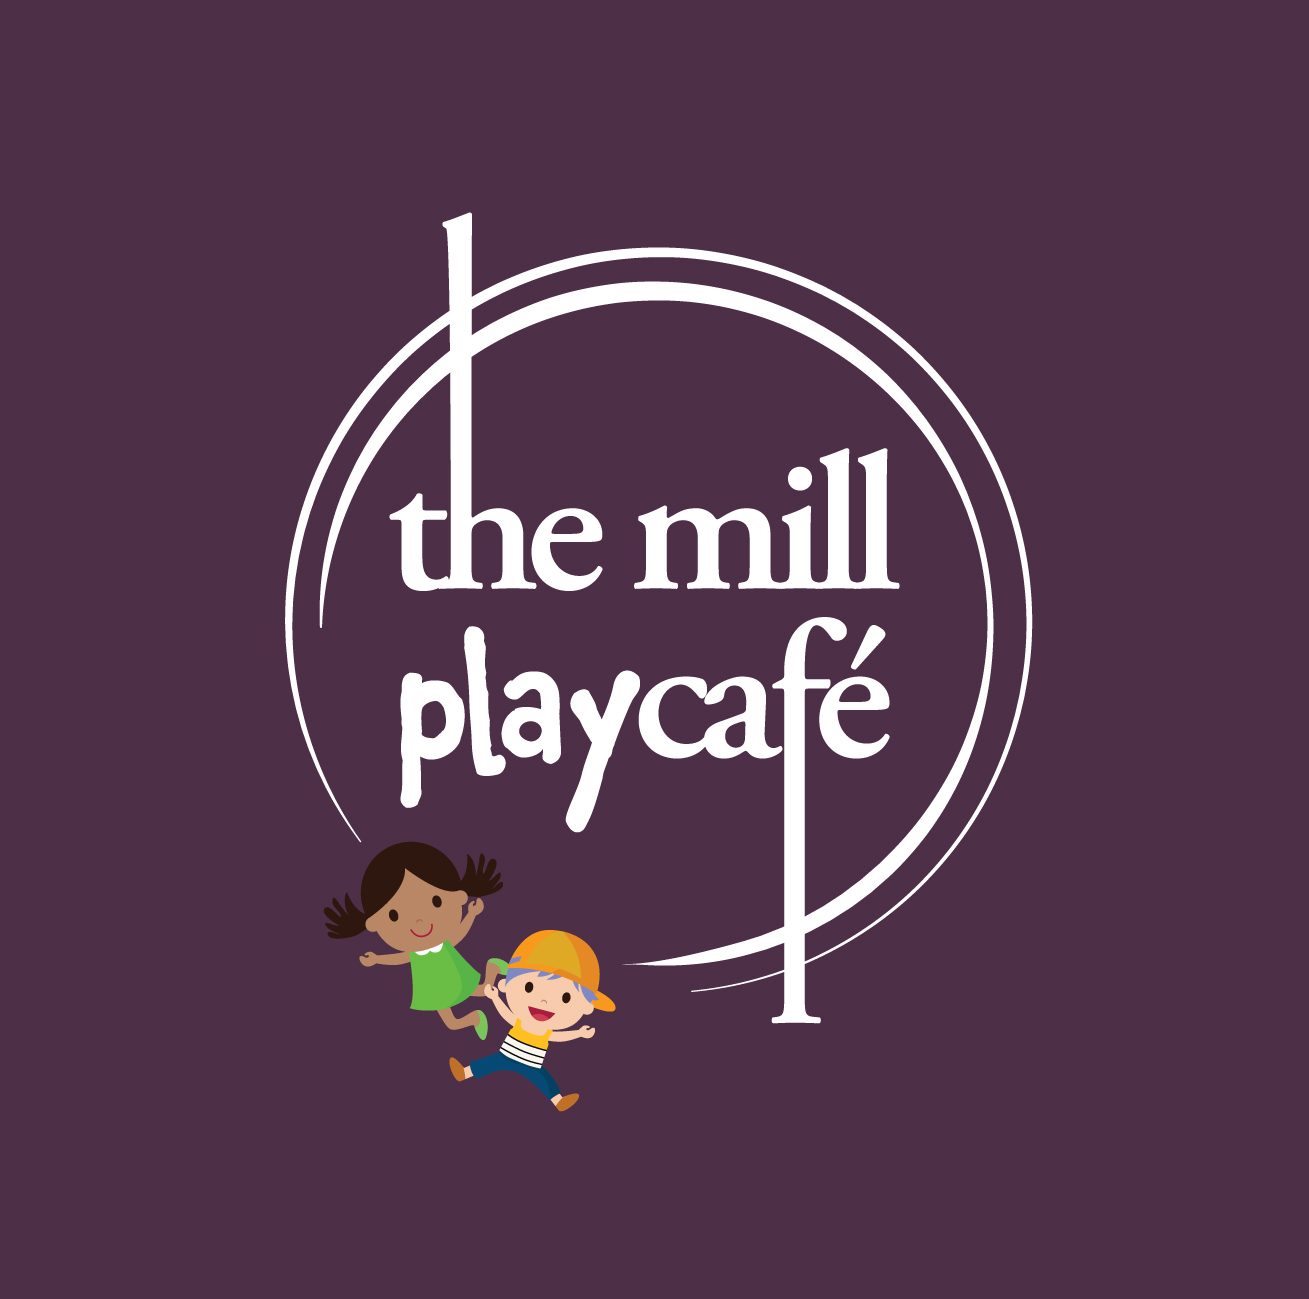 the mill playcafé mockup